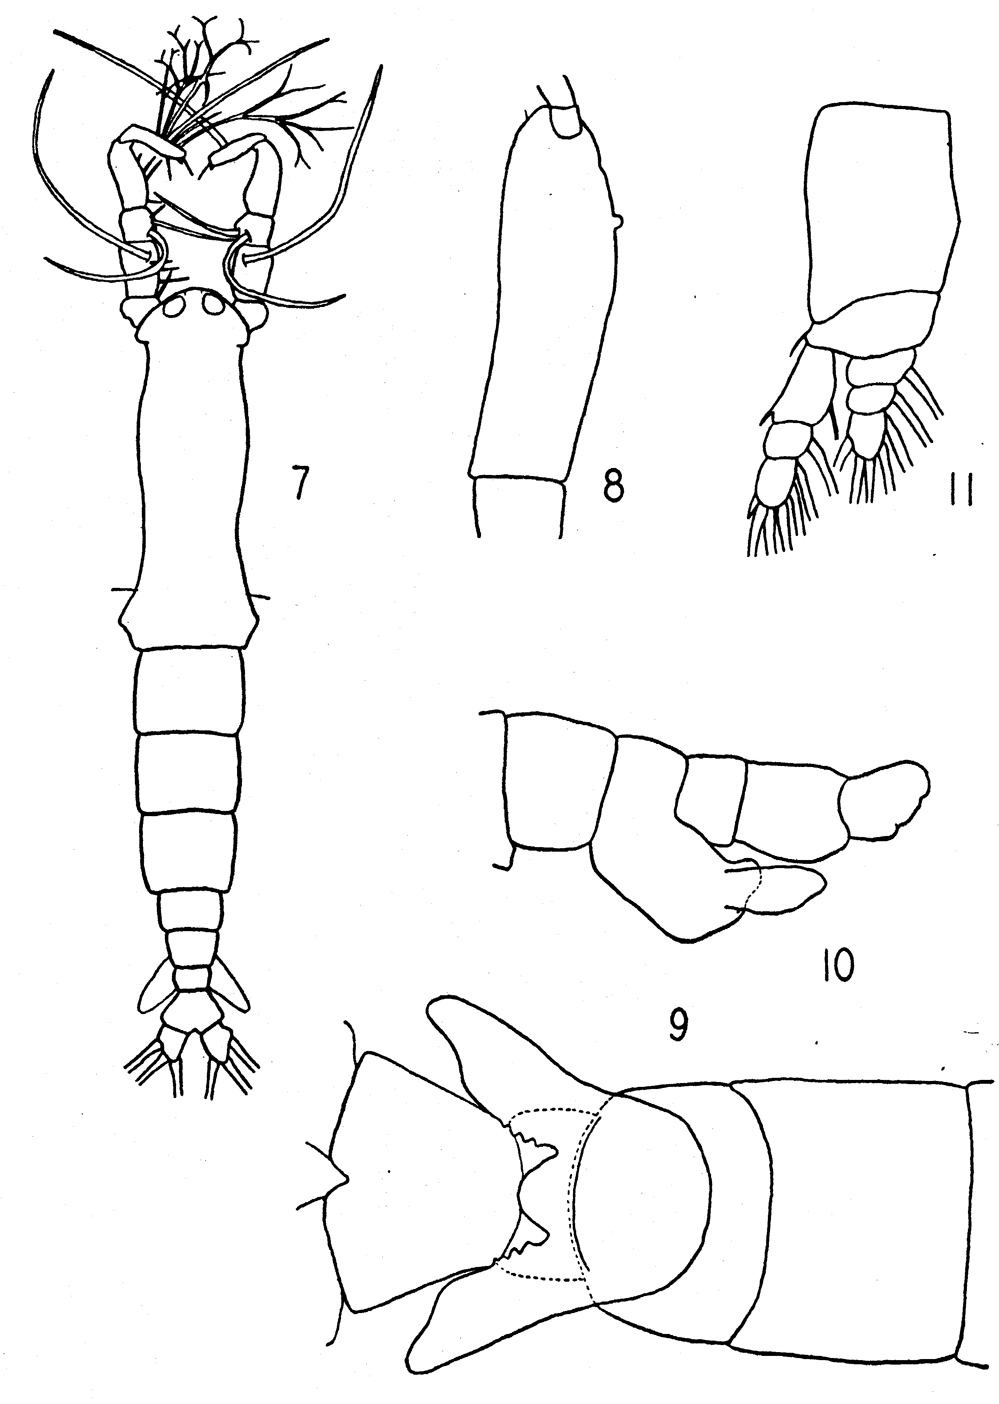 Species Cymbasoma quadridens - Plate 1 of morphological figures